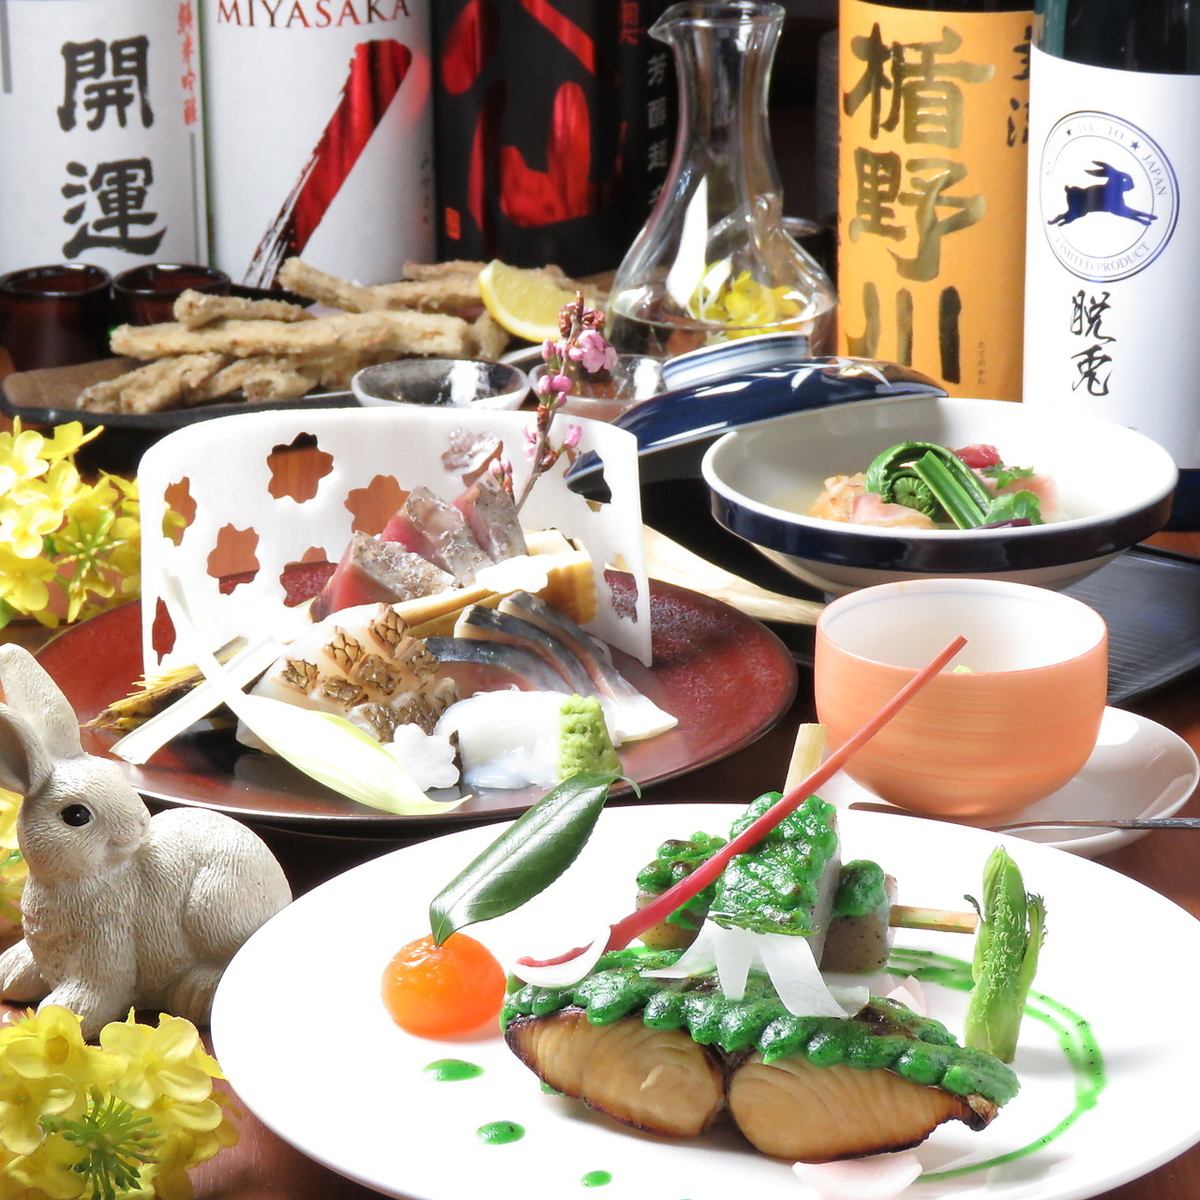 `` Nau '', a Japanese creative cuisine that uses seasonal ingredients luxuriously